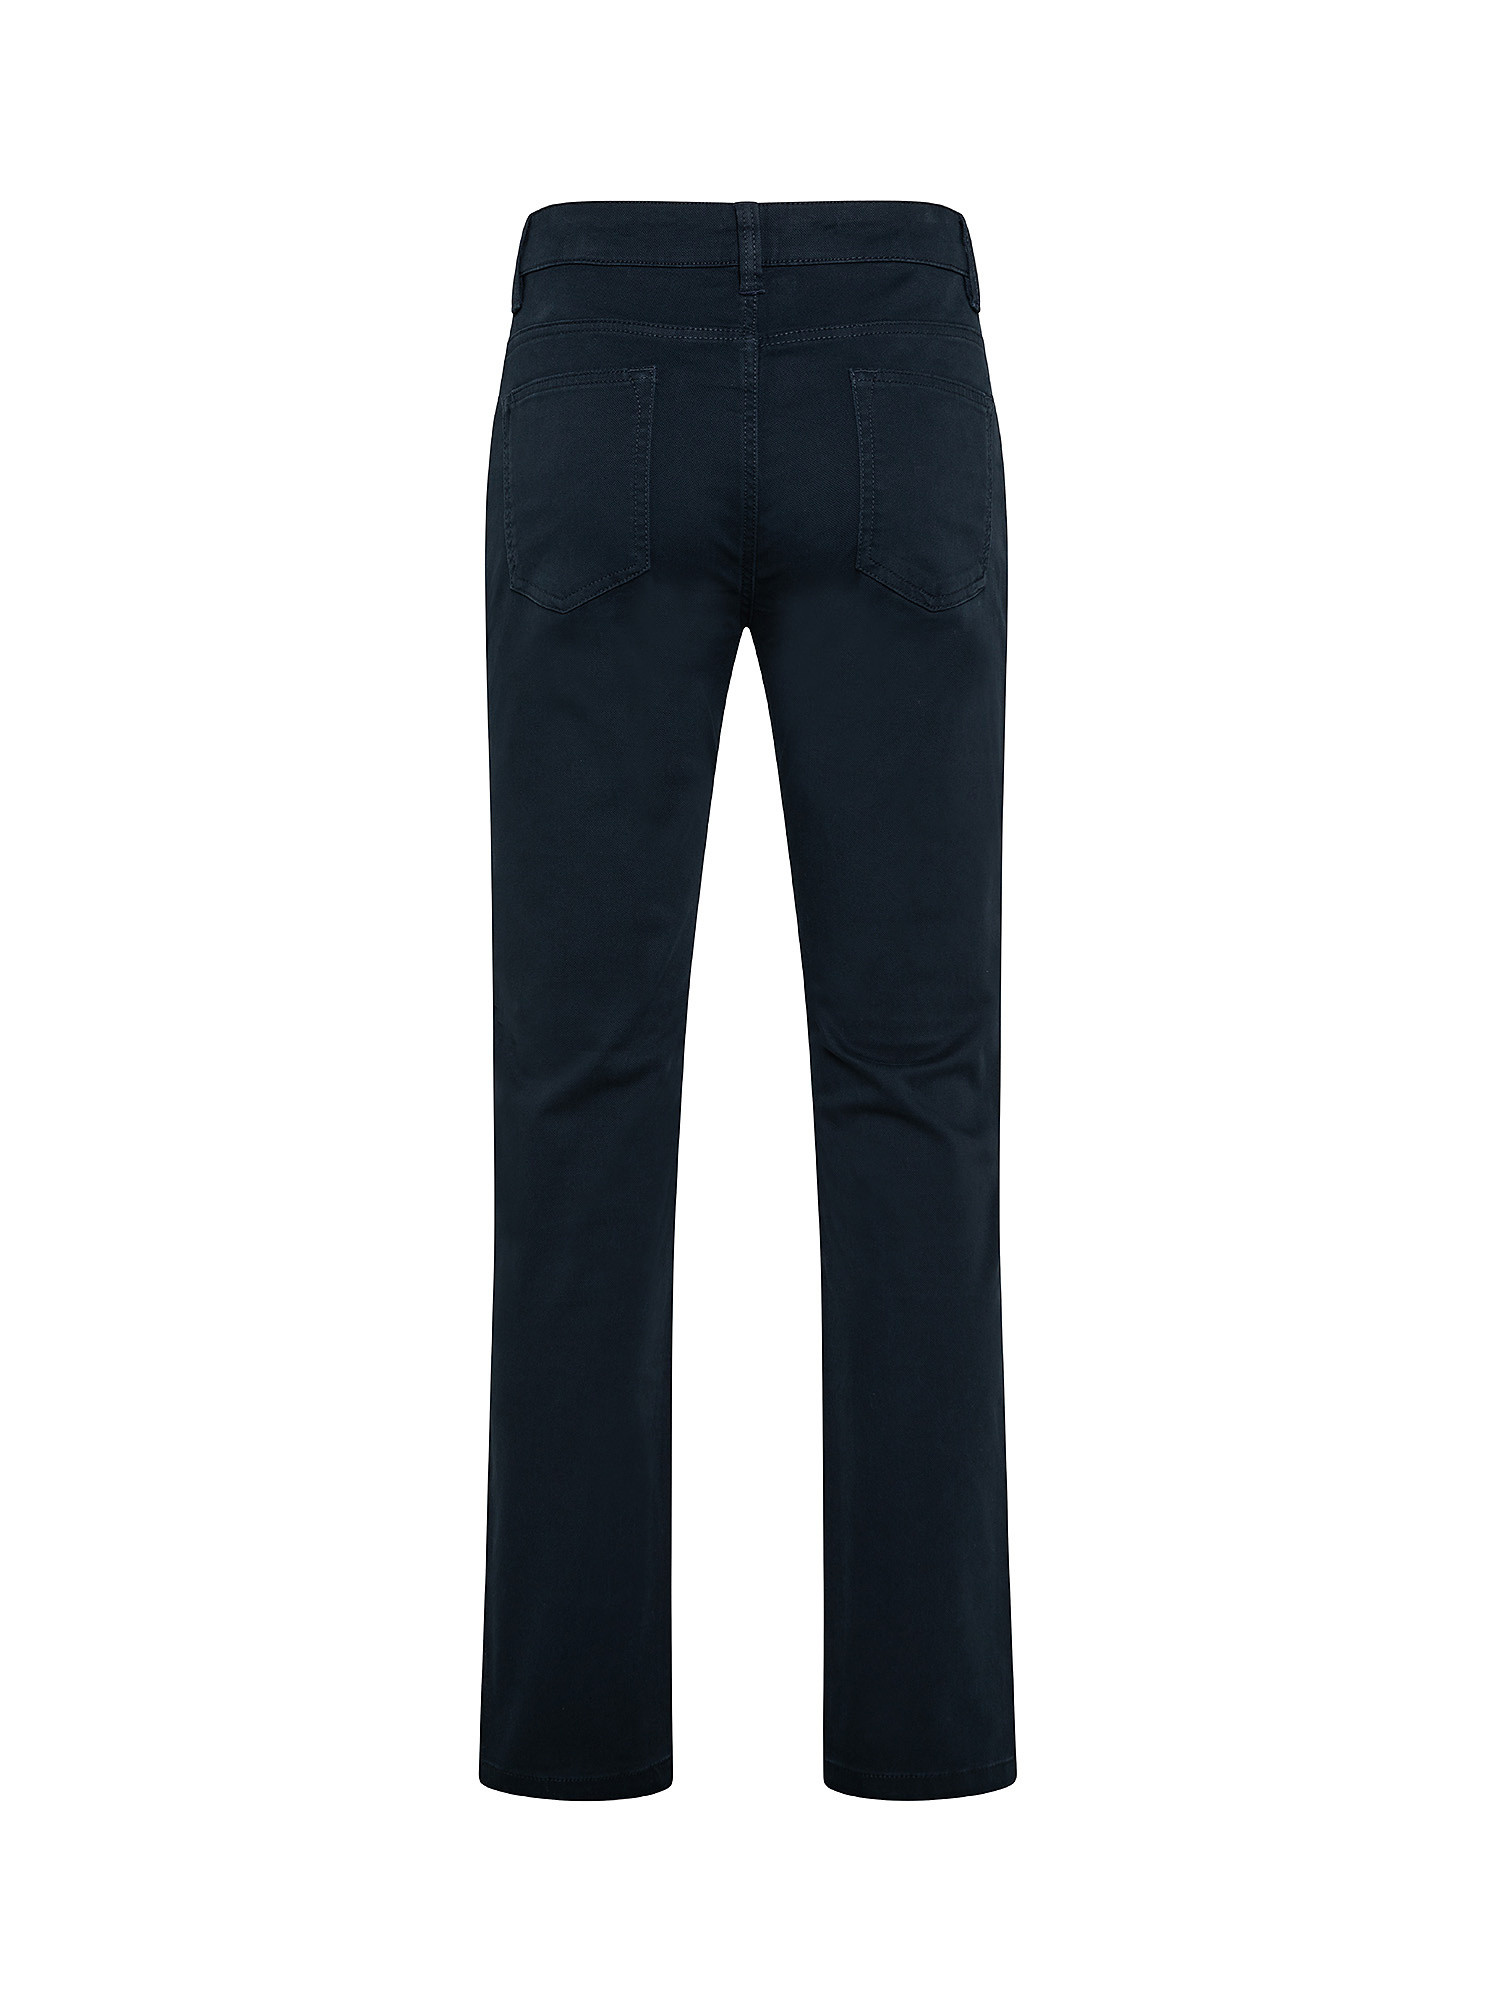 Five-pocket slim comfort fit trousers in stretch cotton, Dark Blue, large image number 1